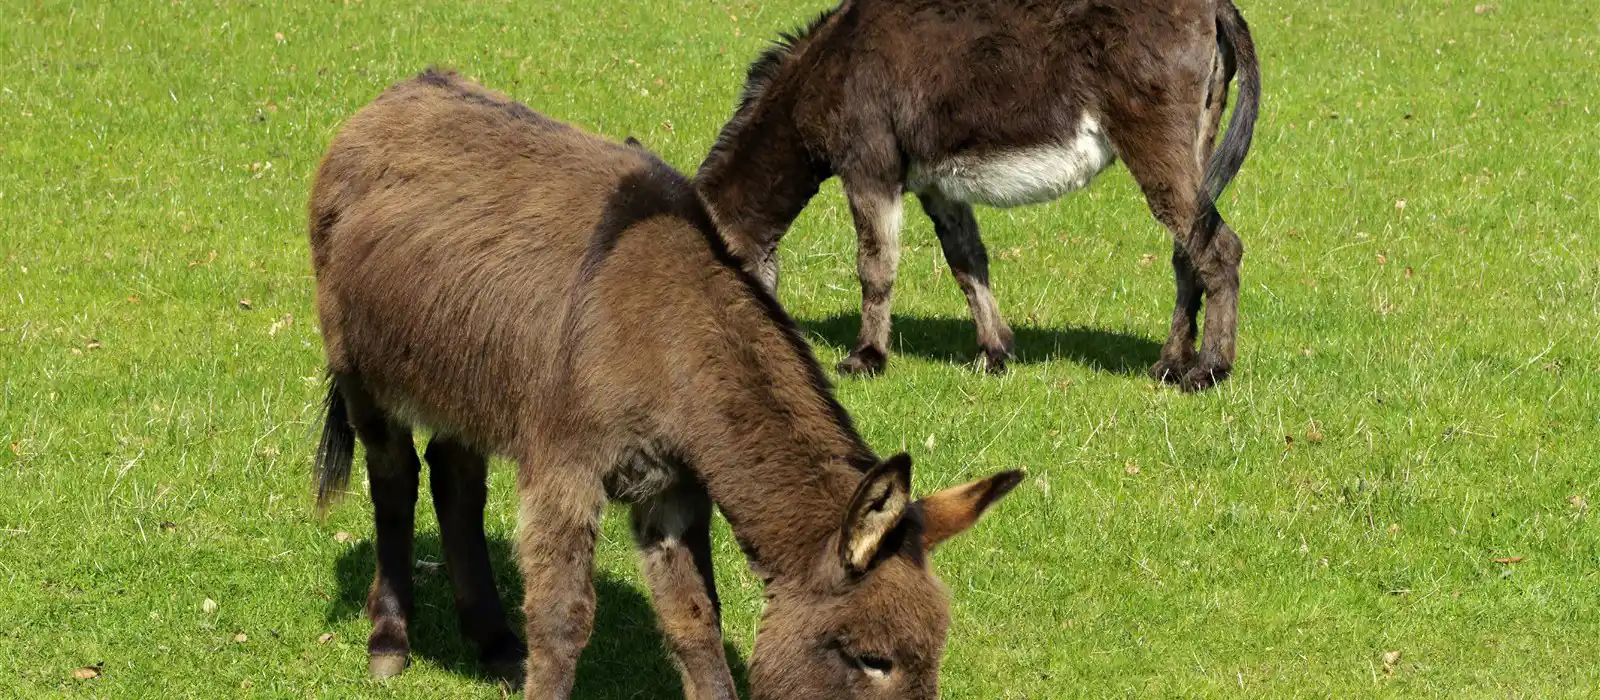 Meet some happy donkeys at the Donkey Sanctuary near Sidmouth, Devon